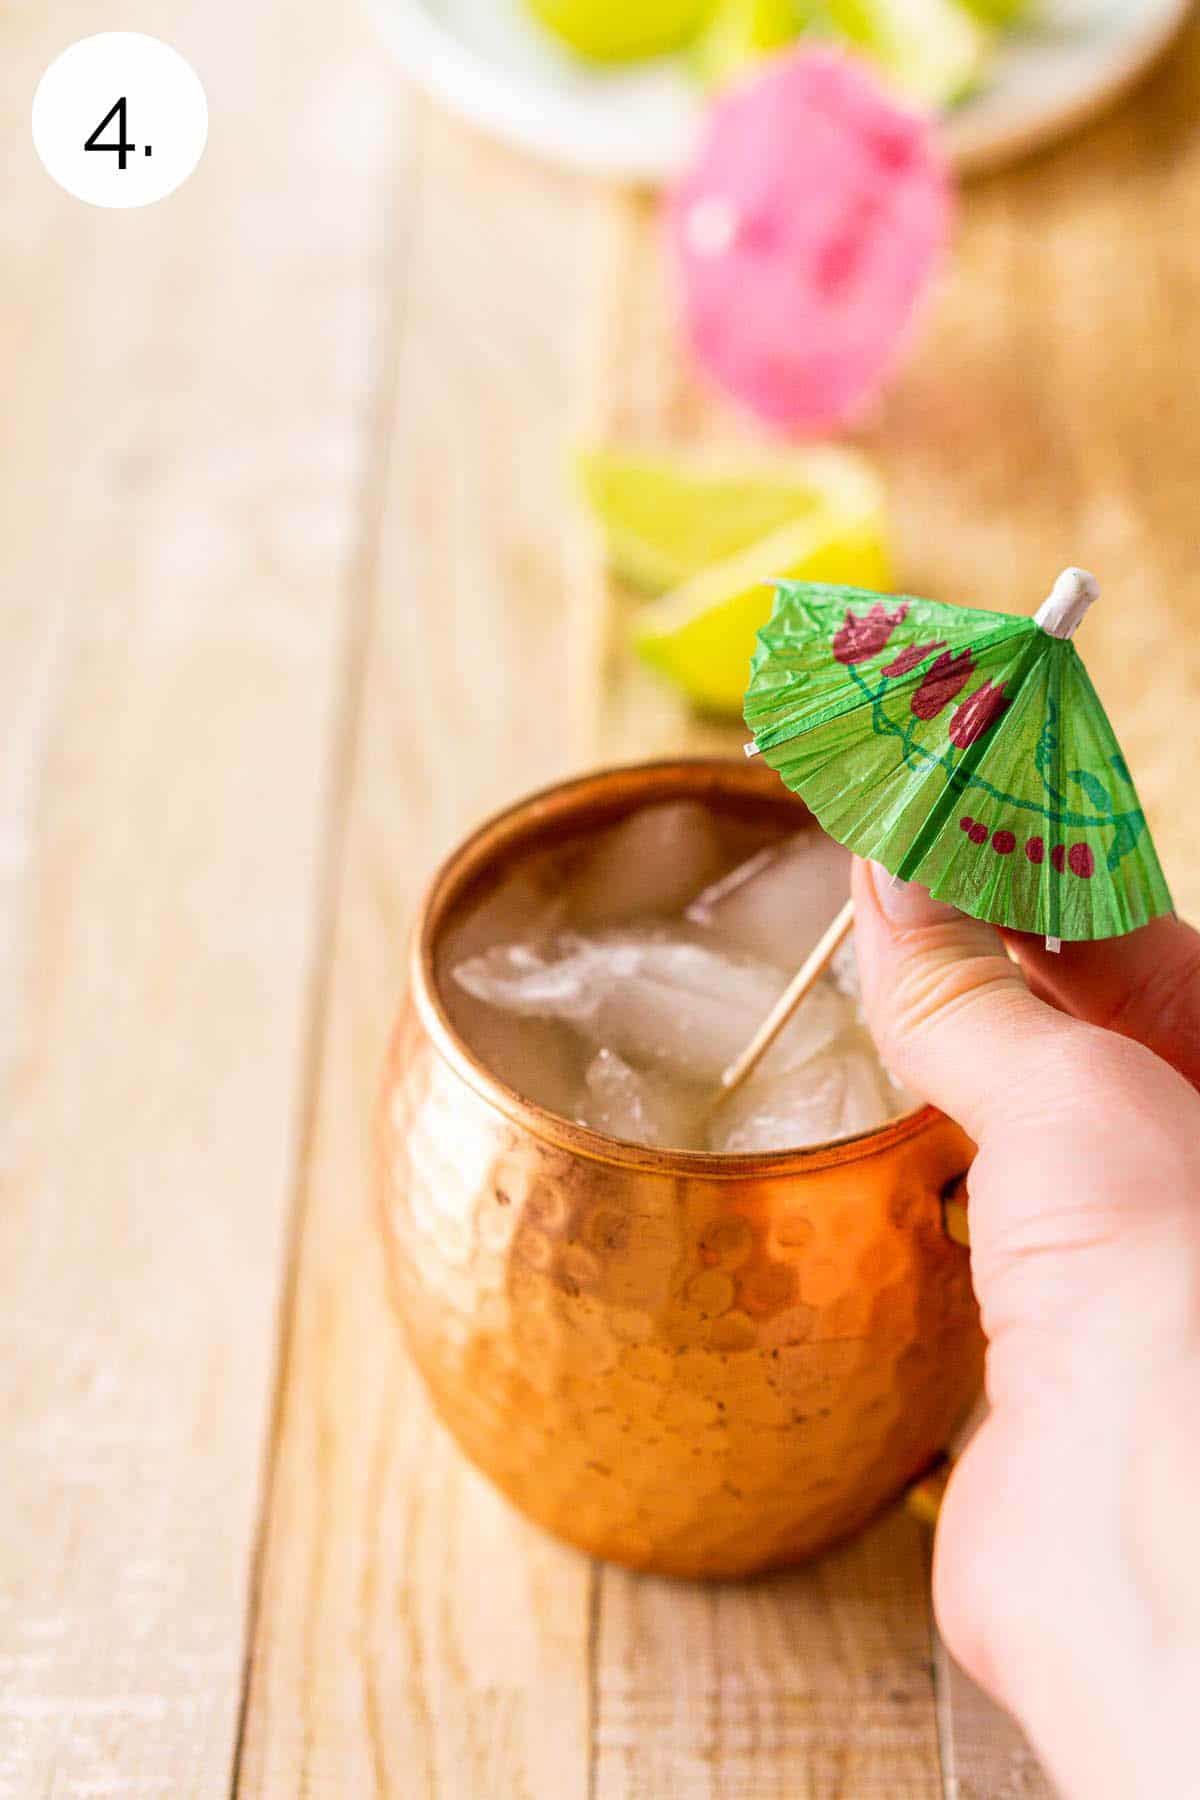 A hand placing a tiki cocktail umbrella in the copper mug on a cream-colored wooden board.